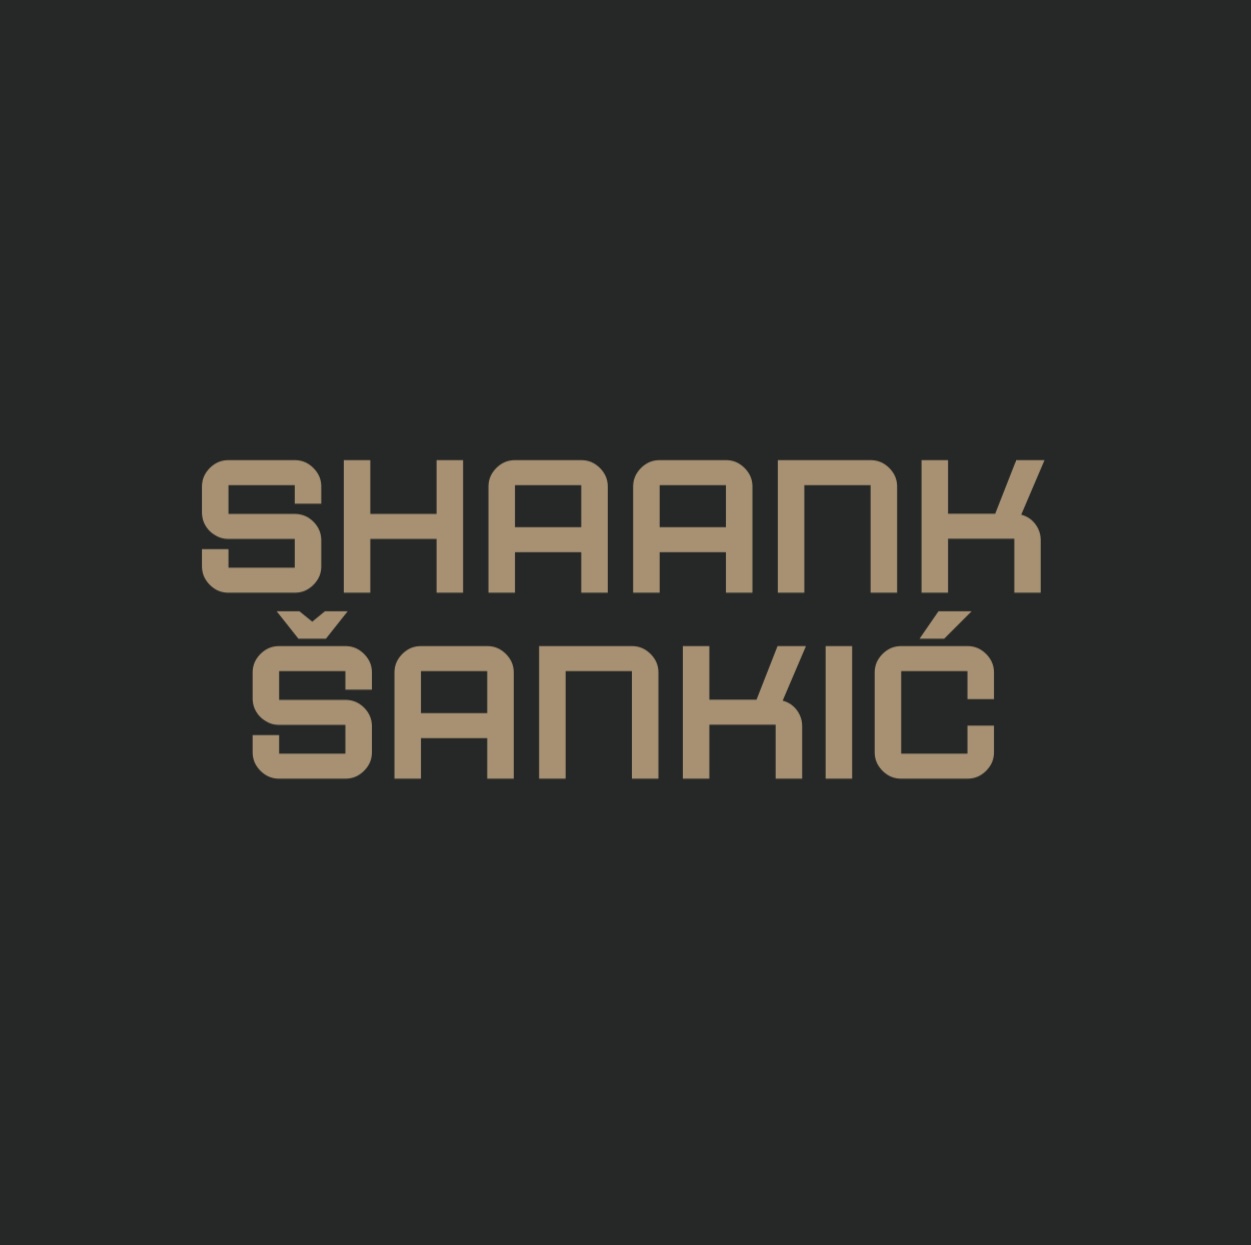 Shaank.šankić Logo